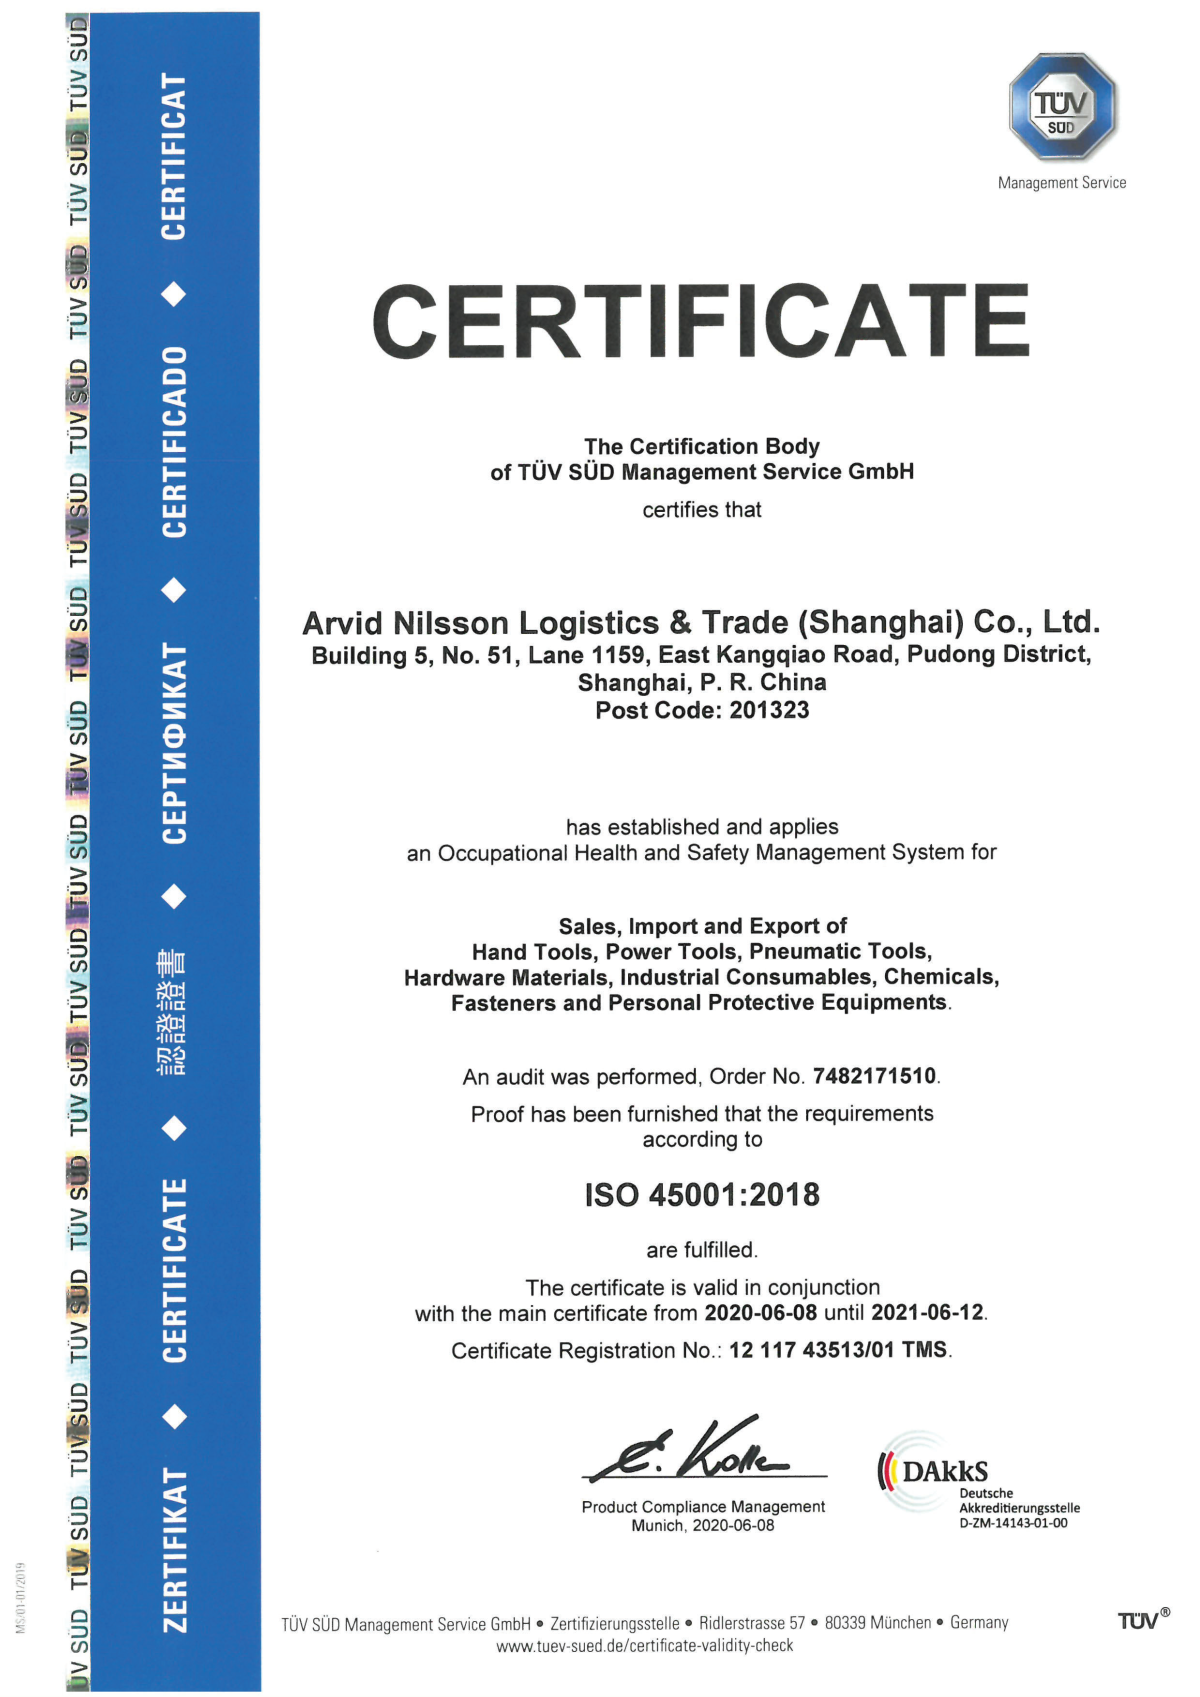 WLC-C-0.29 A0 Arvidnilsson Nilsson Logistics & Trade (shanghai)Co., Ltd -ISO45001 English Version